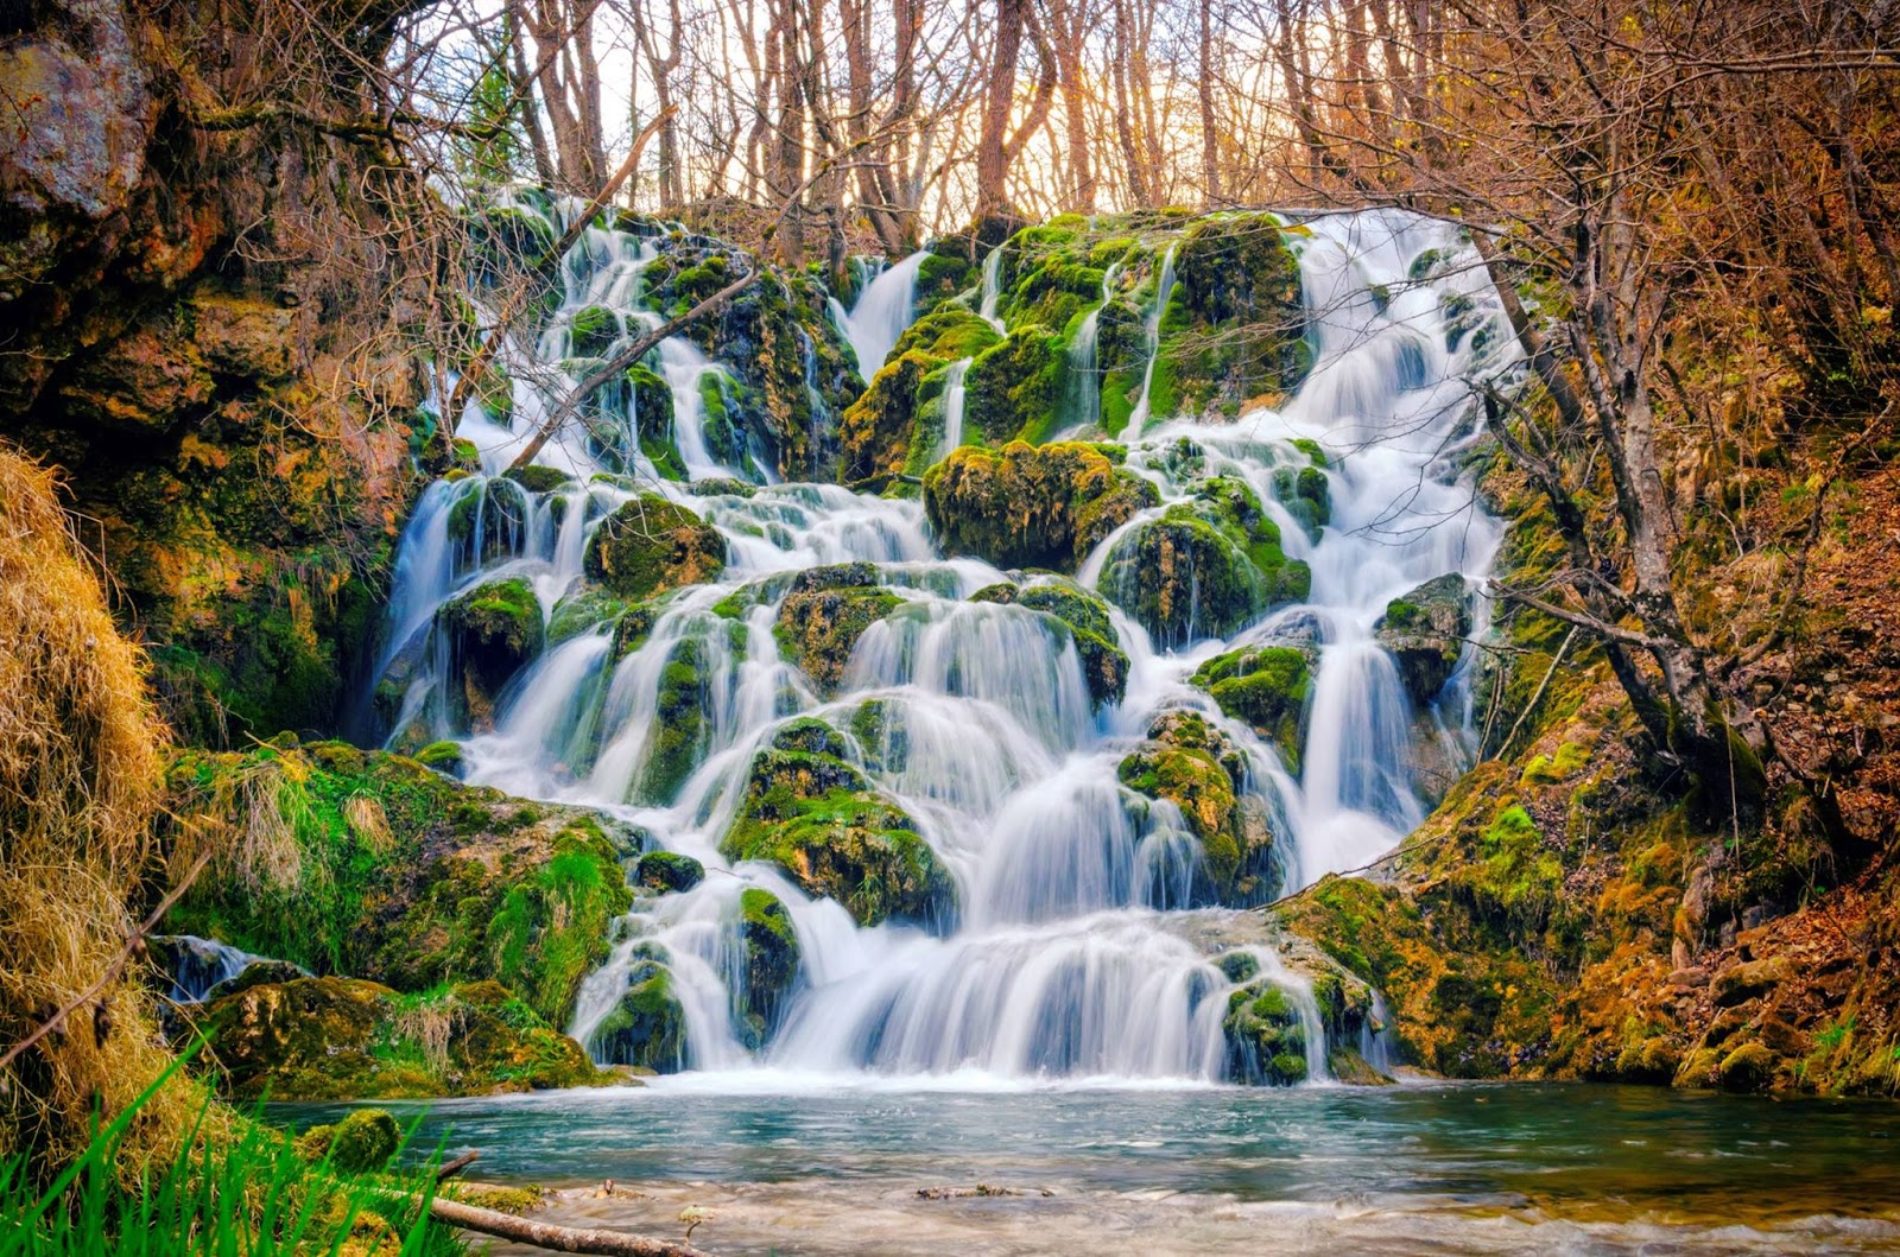 Bosna i Hercegovina prva u regiji i među deset najbogatijih zemalja Evrope s pitkom vodom